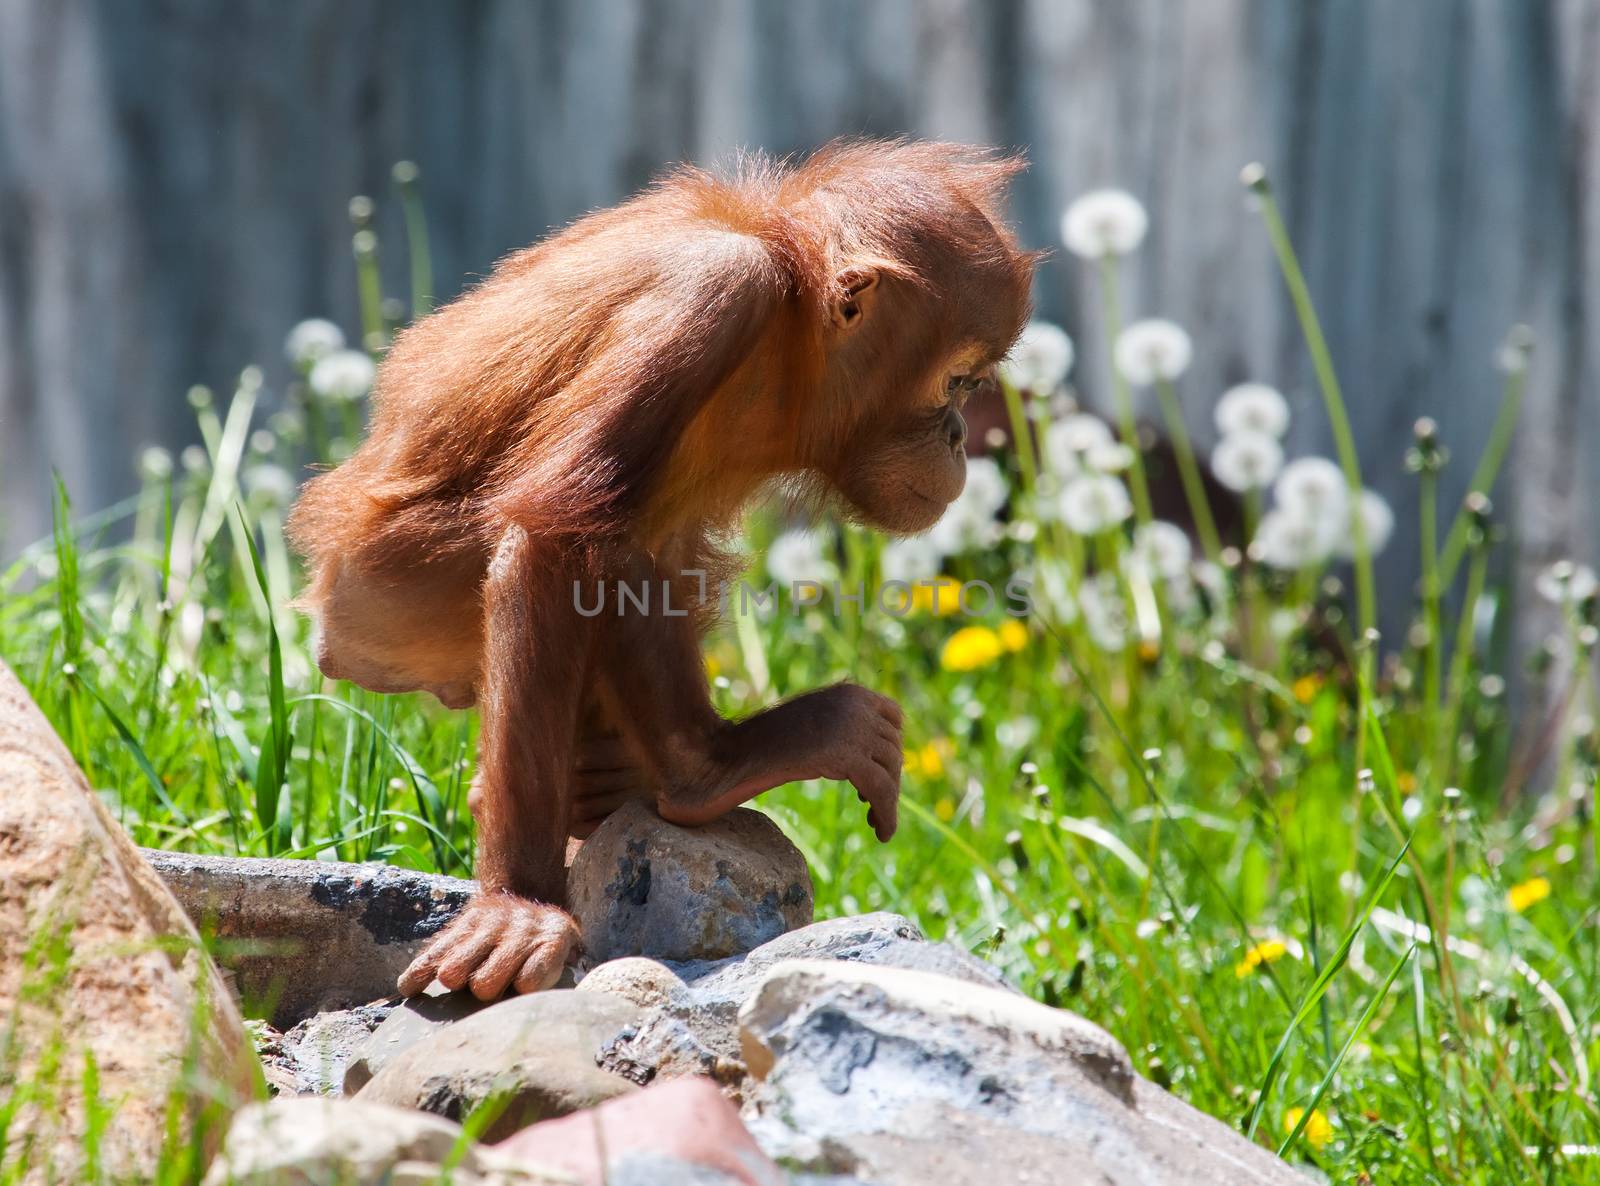 Baby orangutan climbing on a bunch of rocks